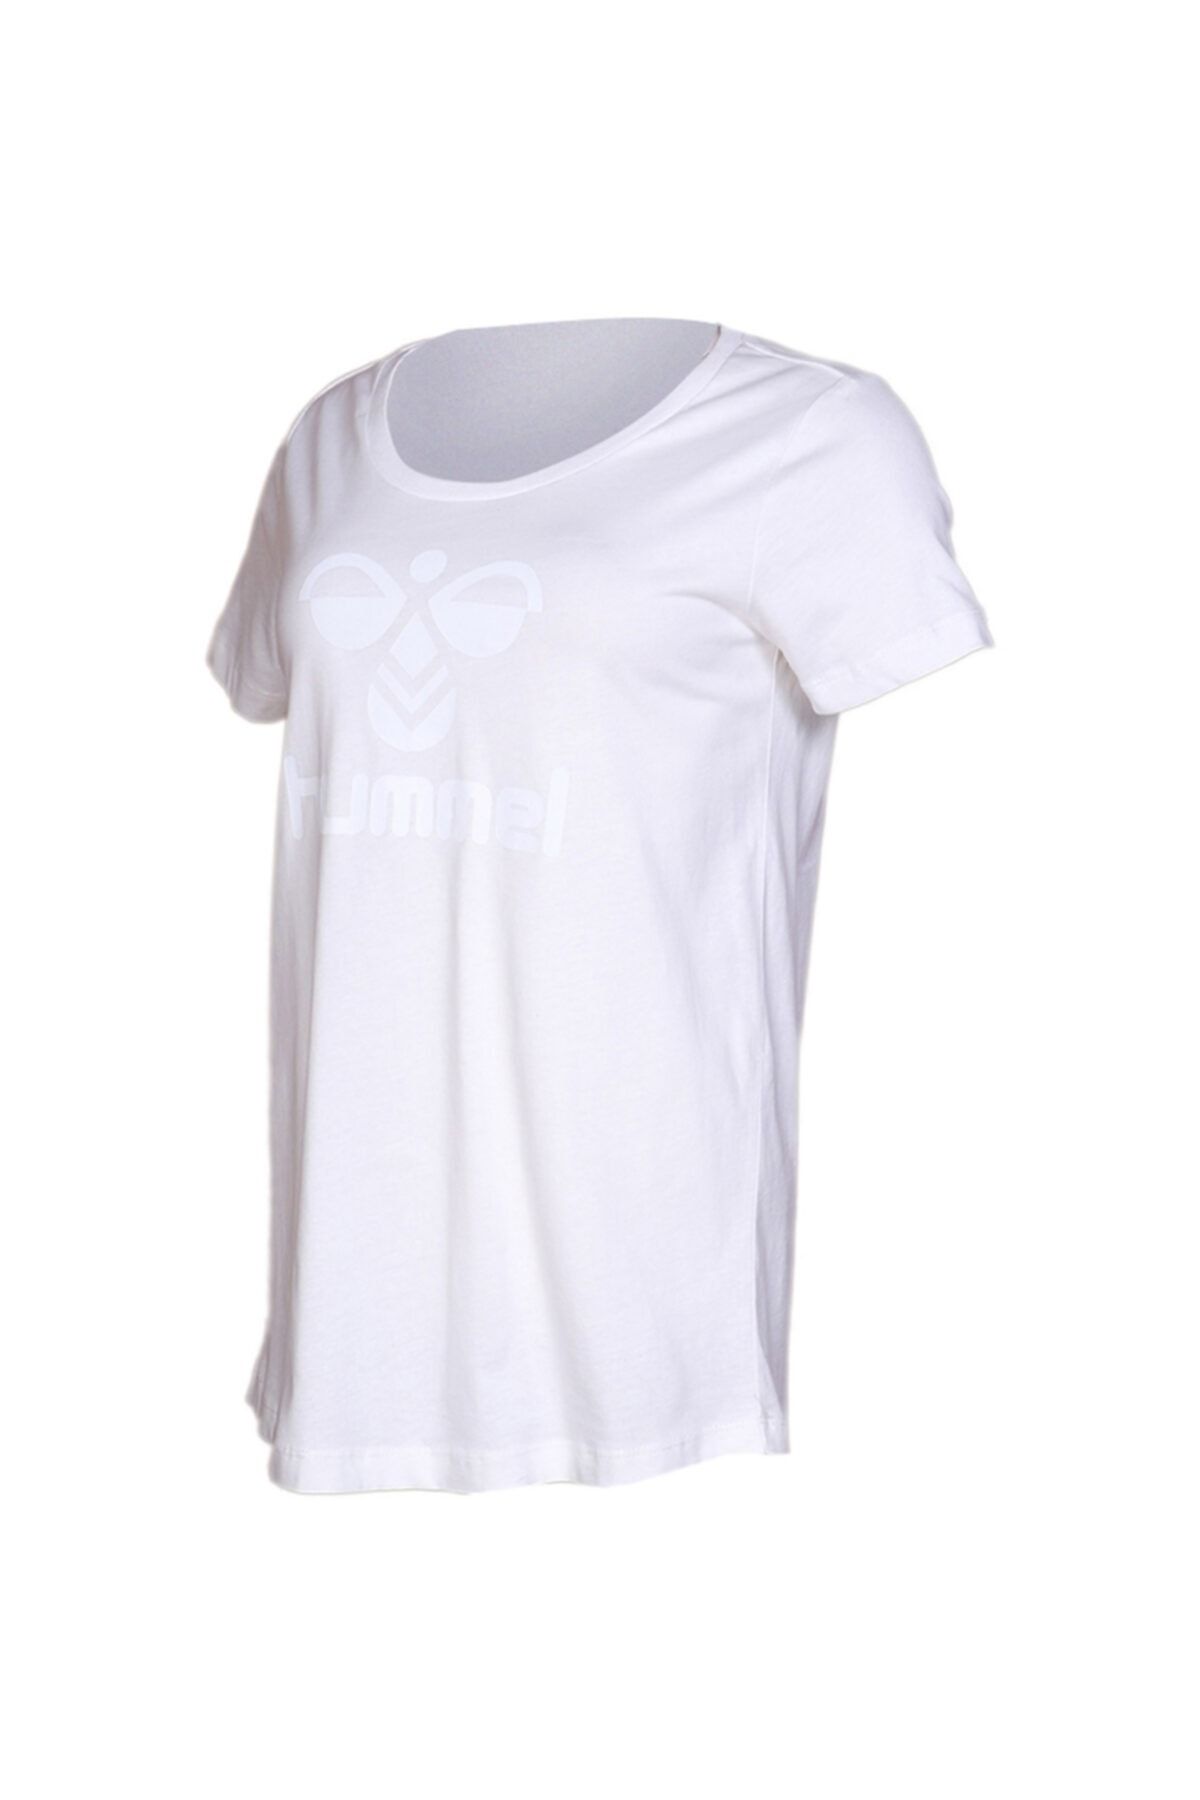 hummel Kadın T-Shirt - Hmlridade T-Shirt S/S Tee